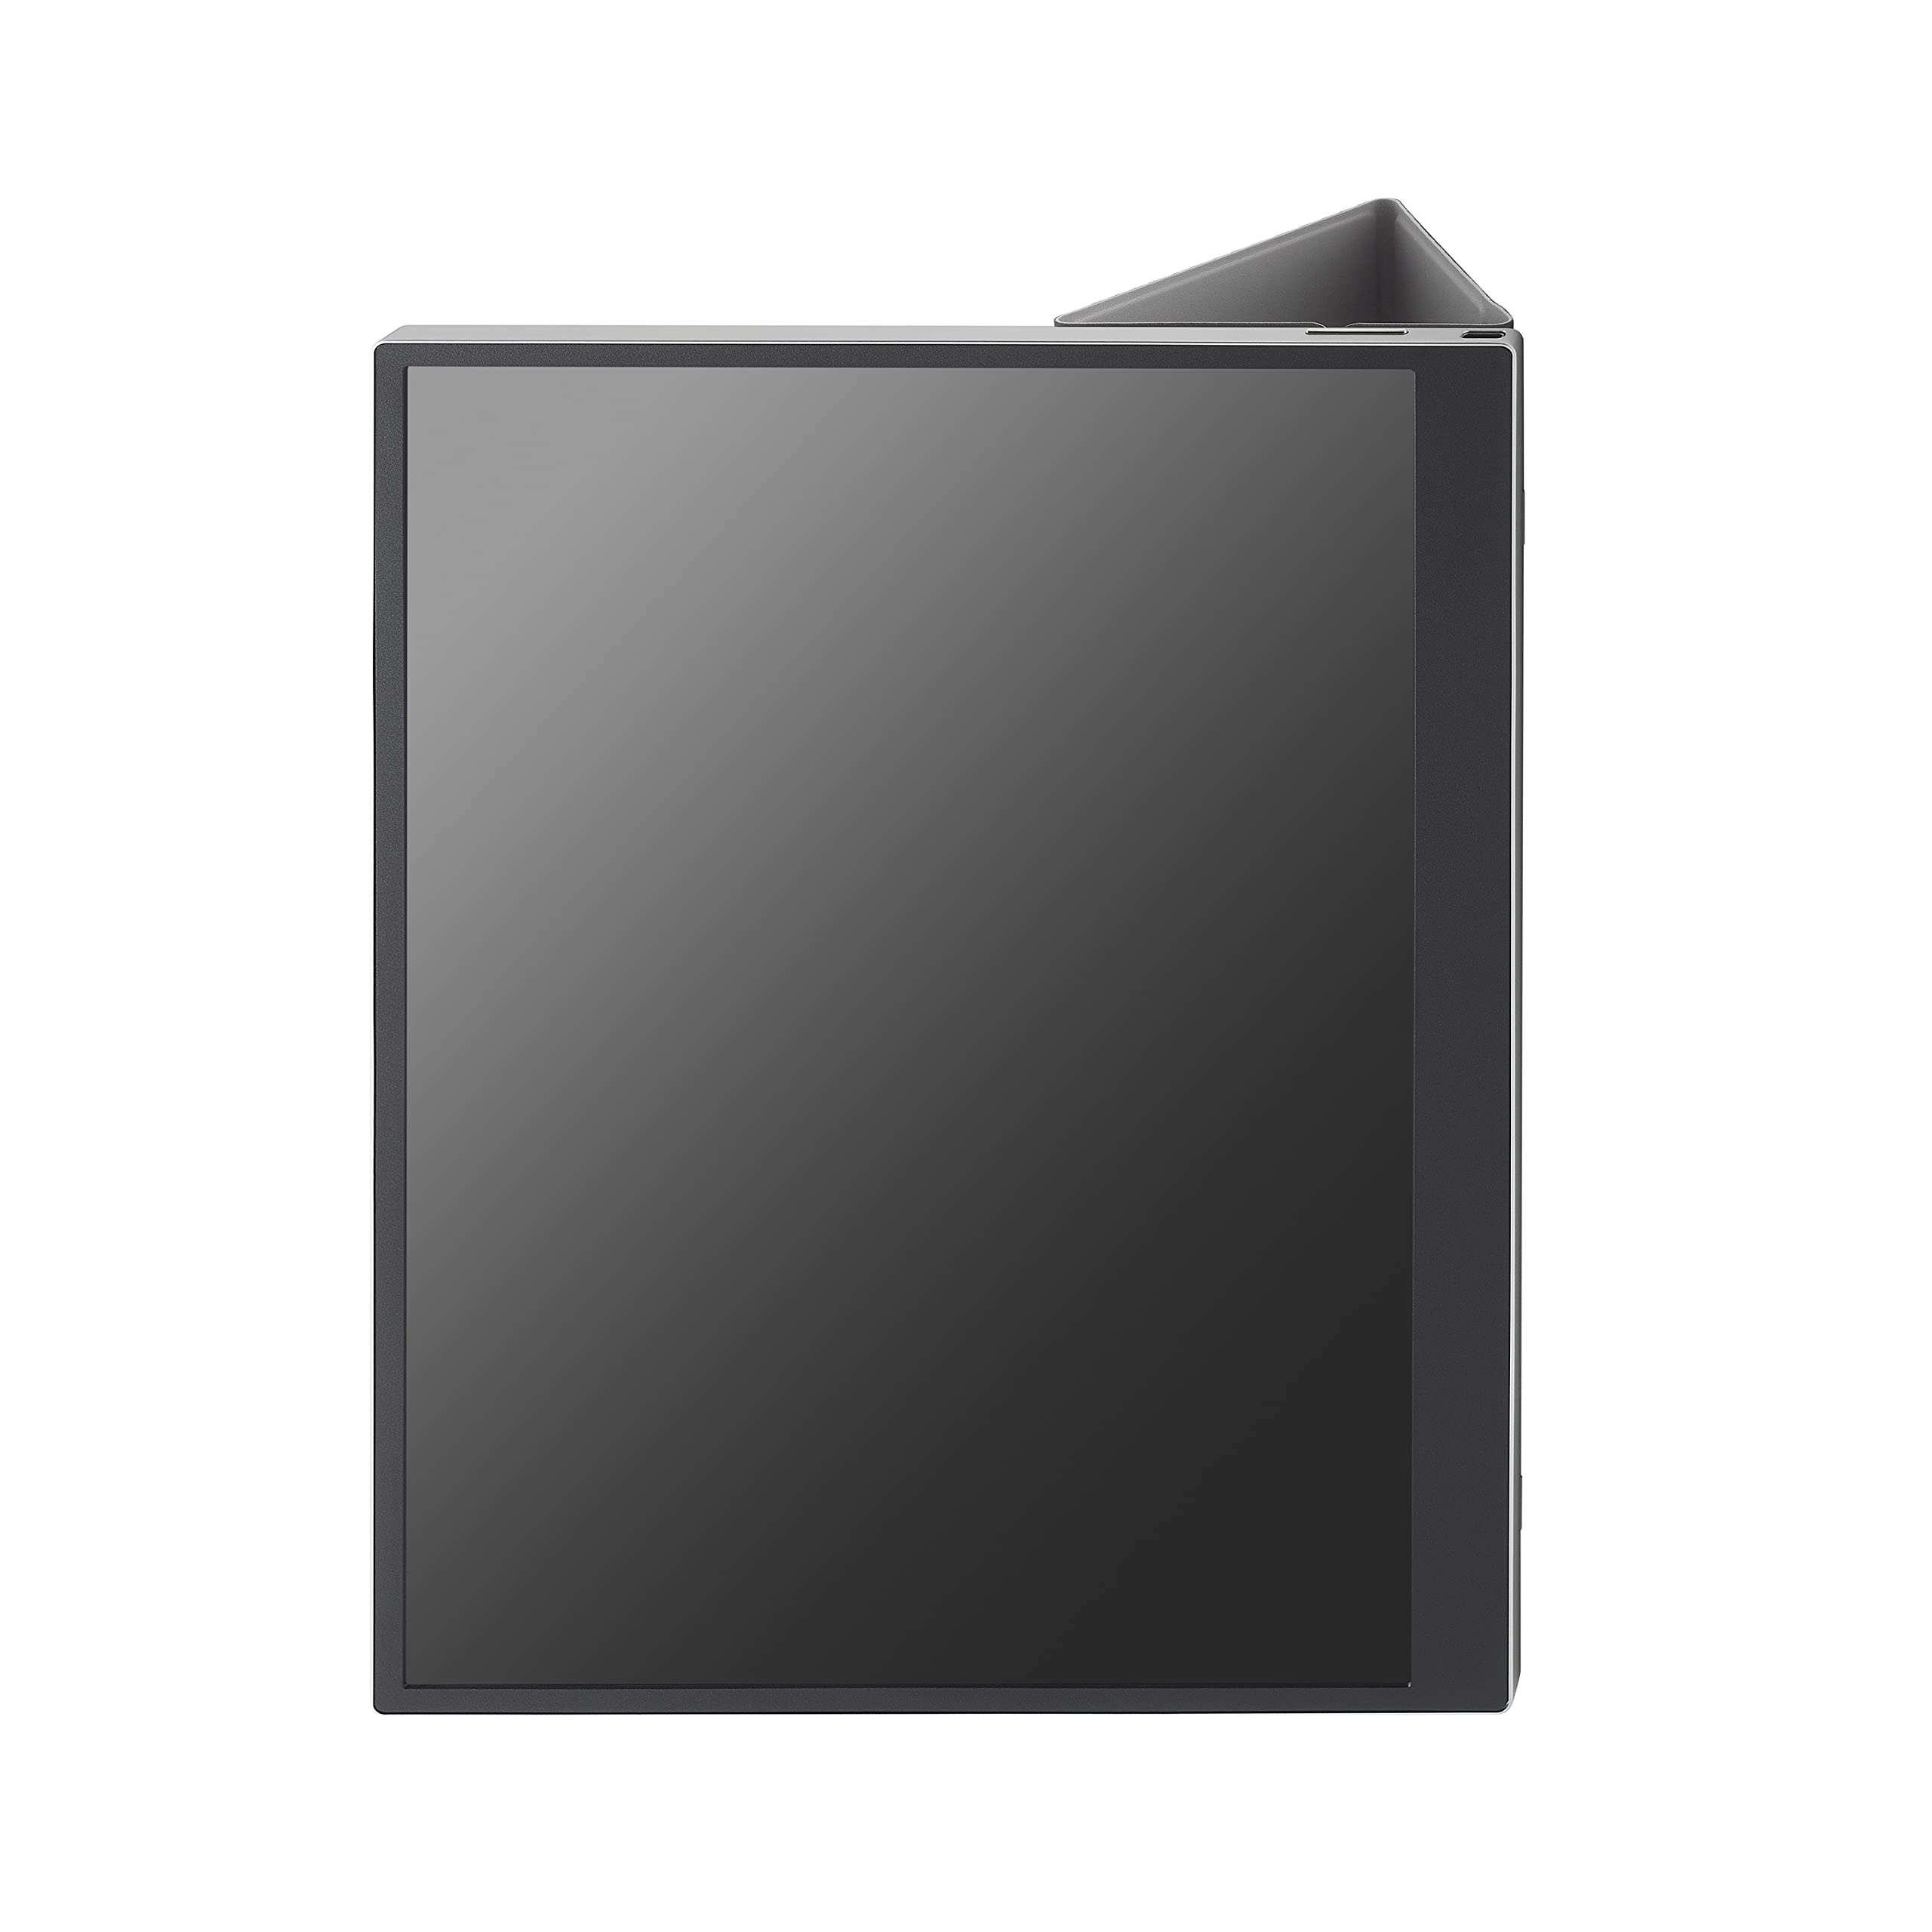 LG Gram +View 16 Inch Portable WQXGA (2560 x 1600) IPS Monitor, 16:10 Aspect Ratio, DCI-P3 99% Color, USB-C Connectivity, Landscape & Portrait Orientation, with Folio Cover/Stand (16MQ70.ADSU1)